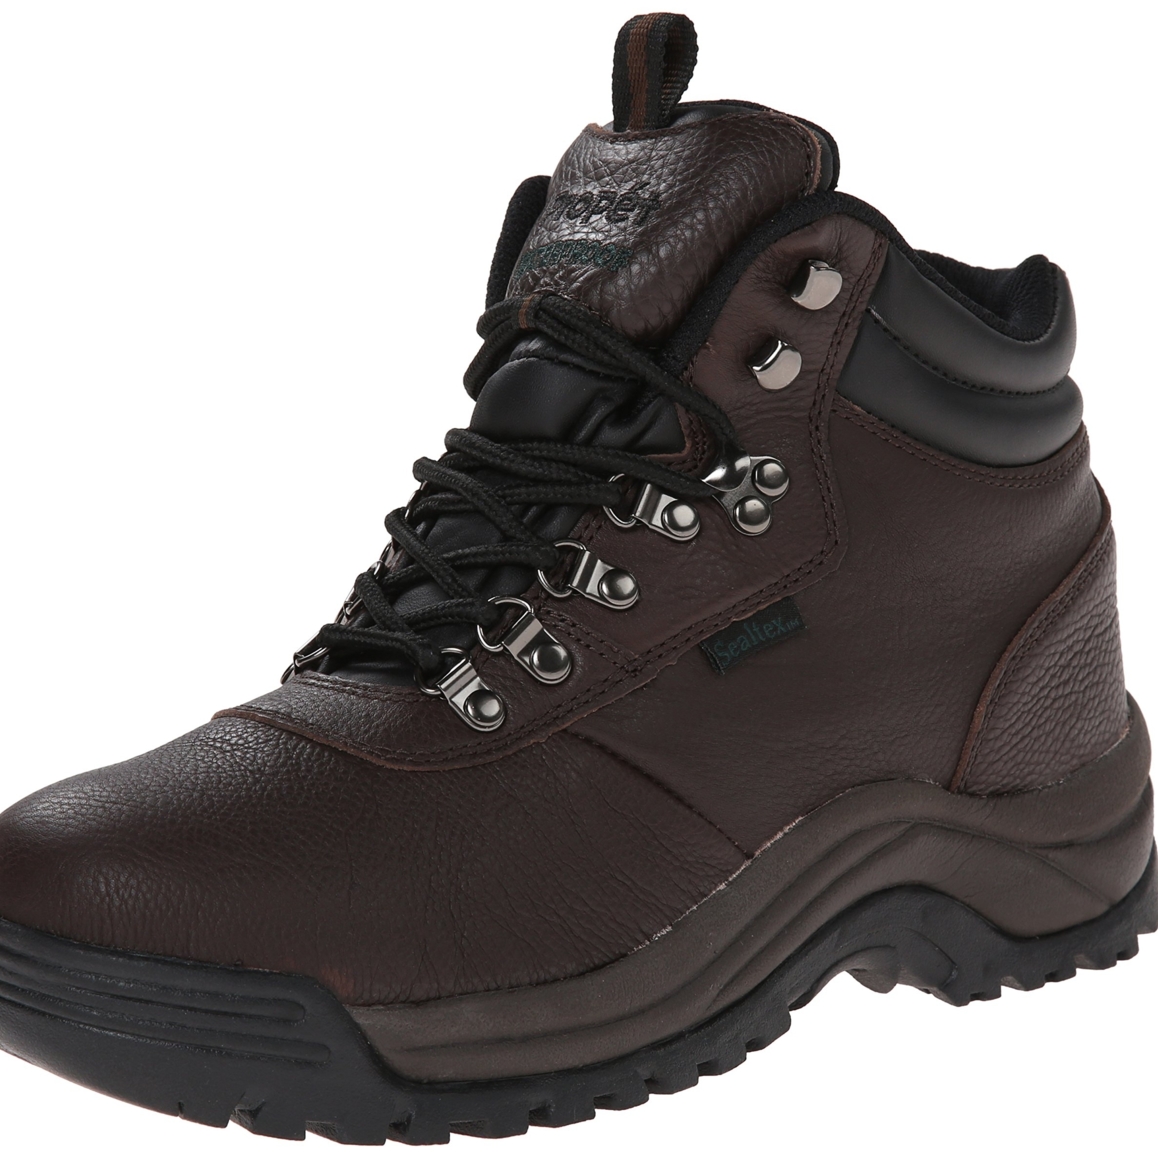 Propet Men's Cliff Walker Hiking Boot Bronco Brown - M3188BRO - BRONCO BROWN, 11.5-4E